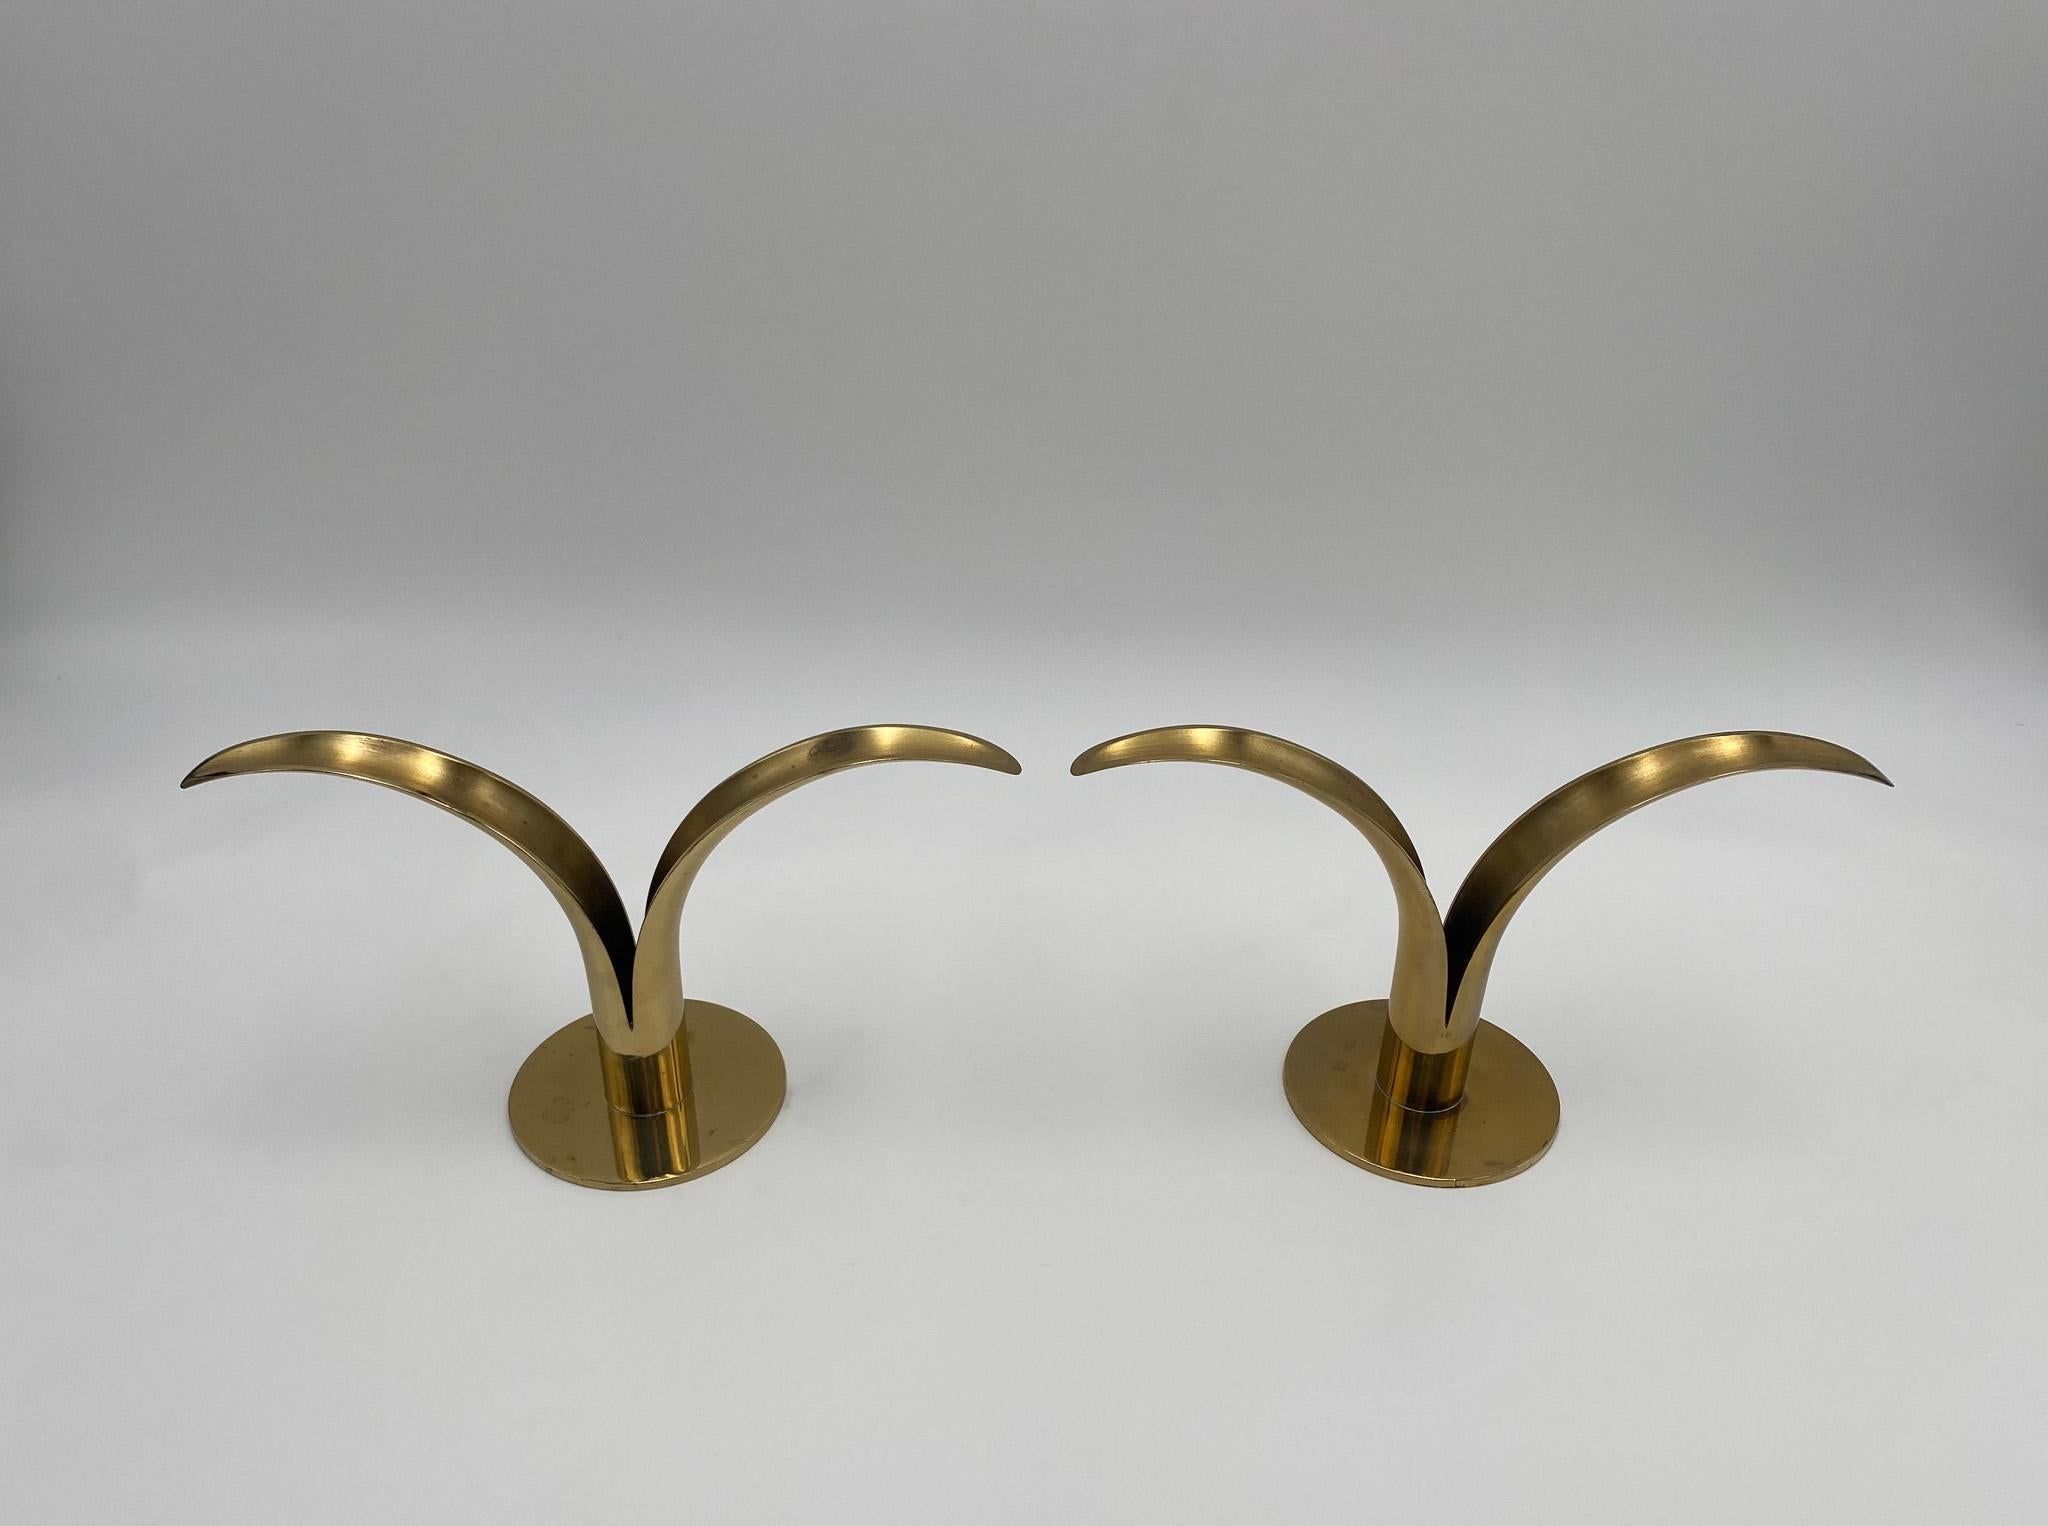 Ivar Ålenius Björk Brass Candle Holders for Ystad Metall, Sweden, 1960's For Sale 4